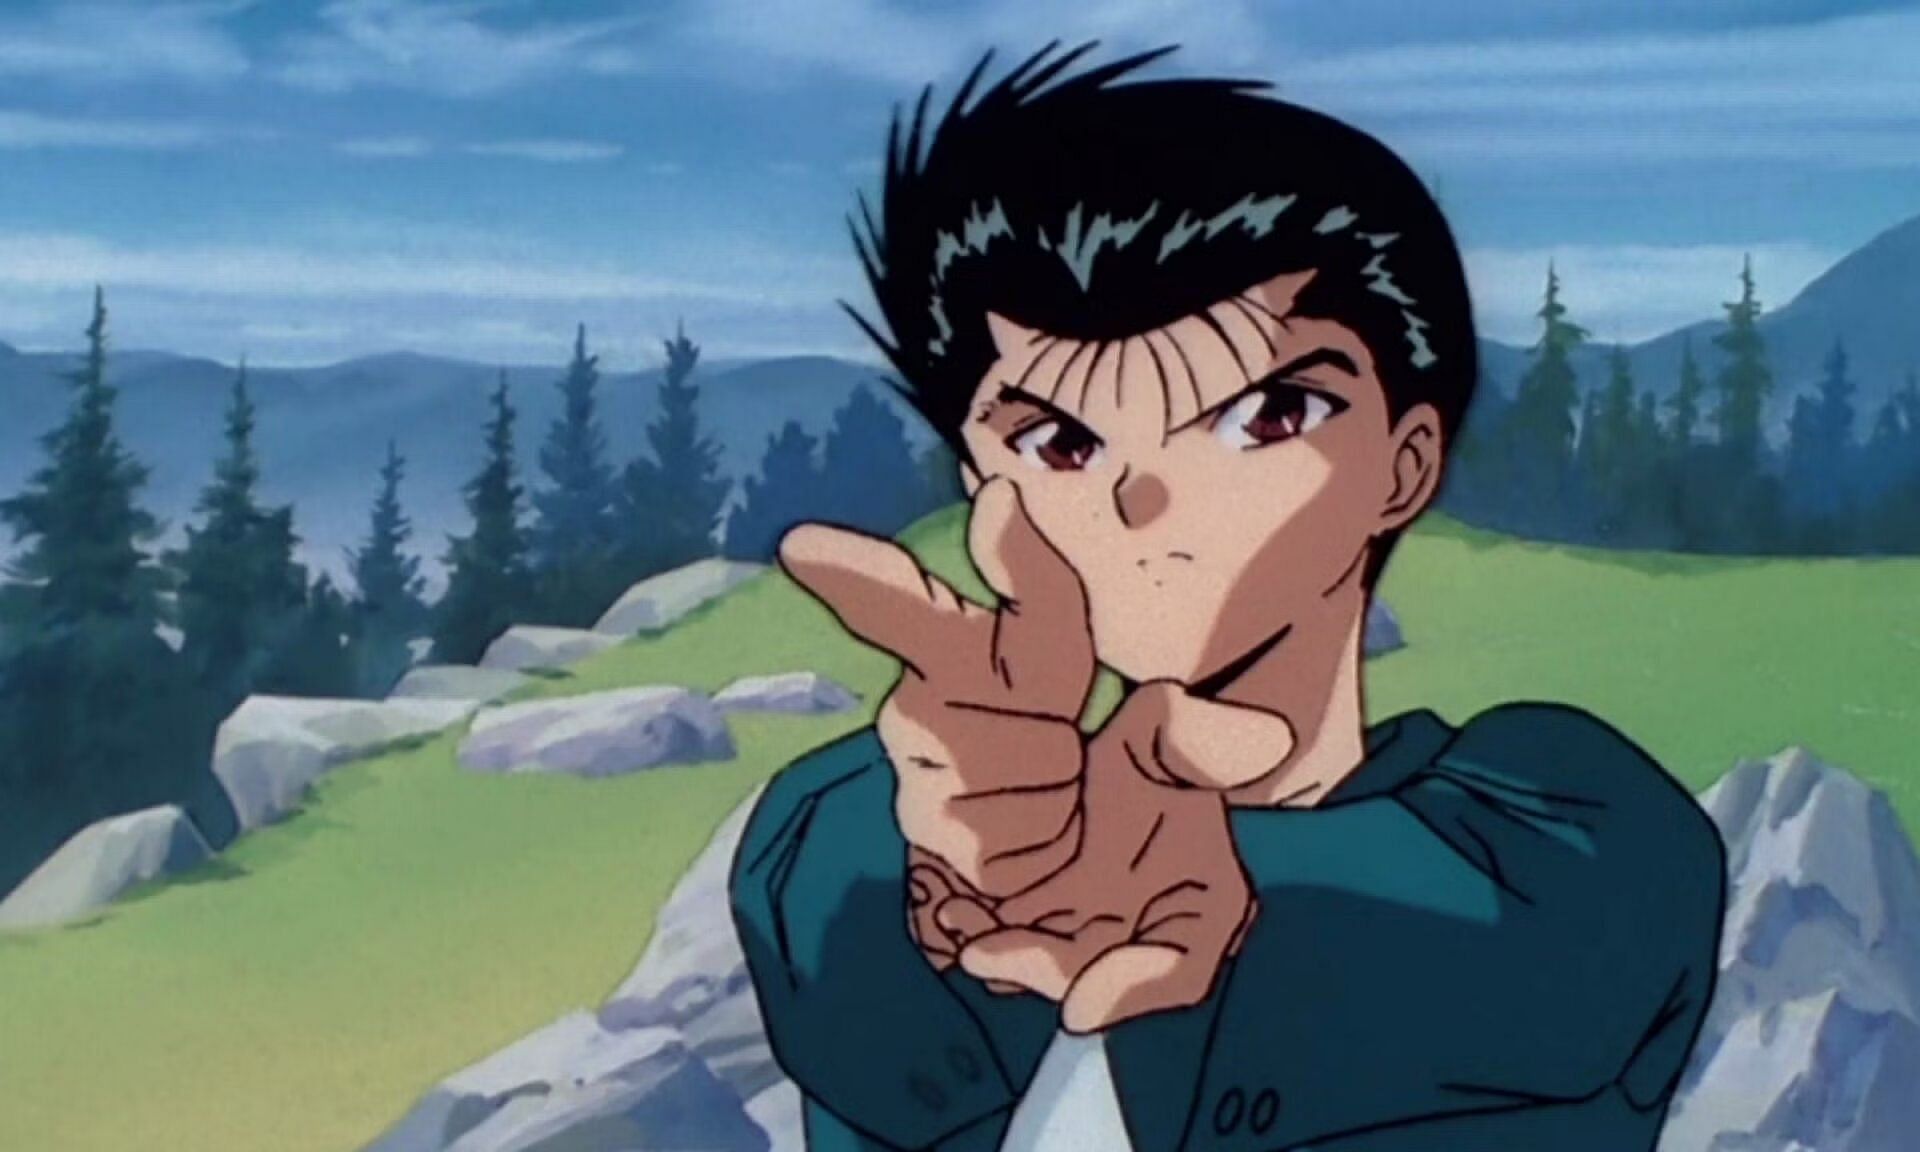 Yusuke as seen in the 90s Yu Yu Hakusho anime (Image via Studio Pierrot)